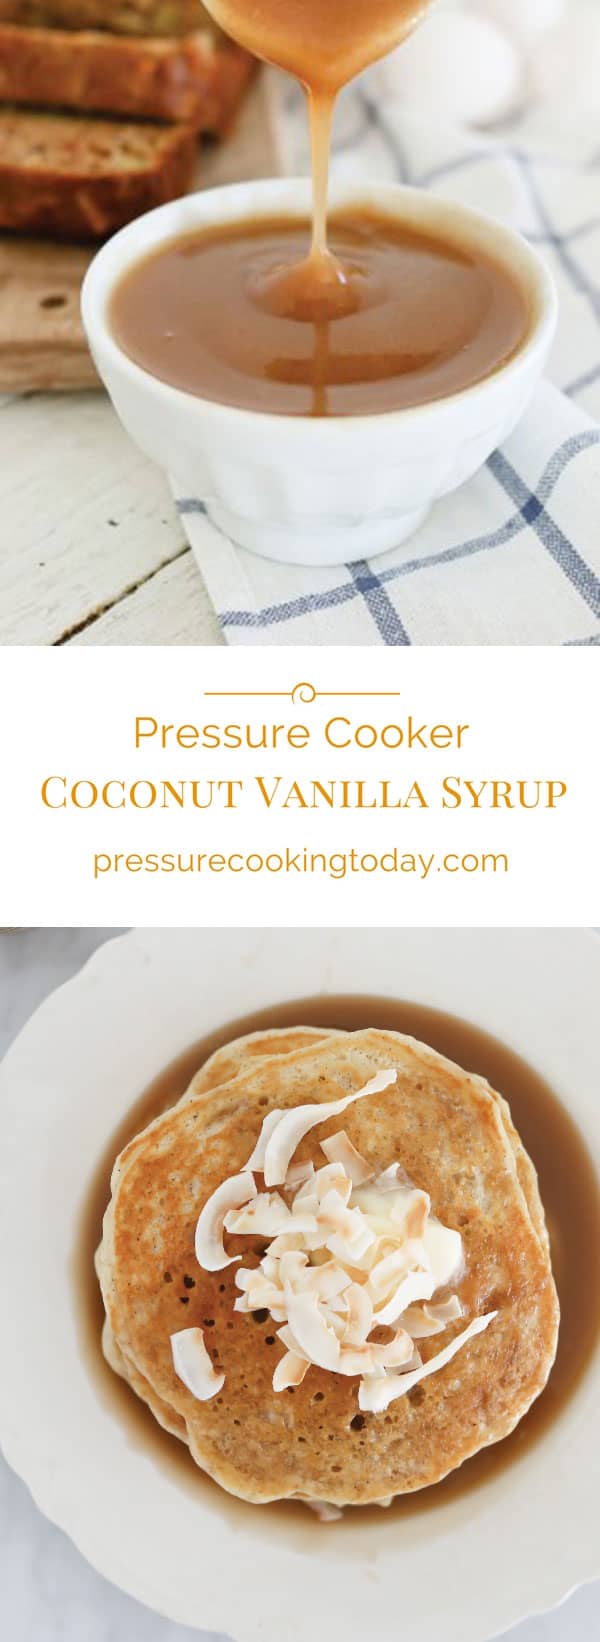 Coconut Vanilla Syrup photo collage